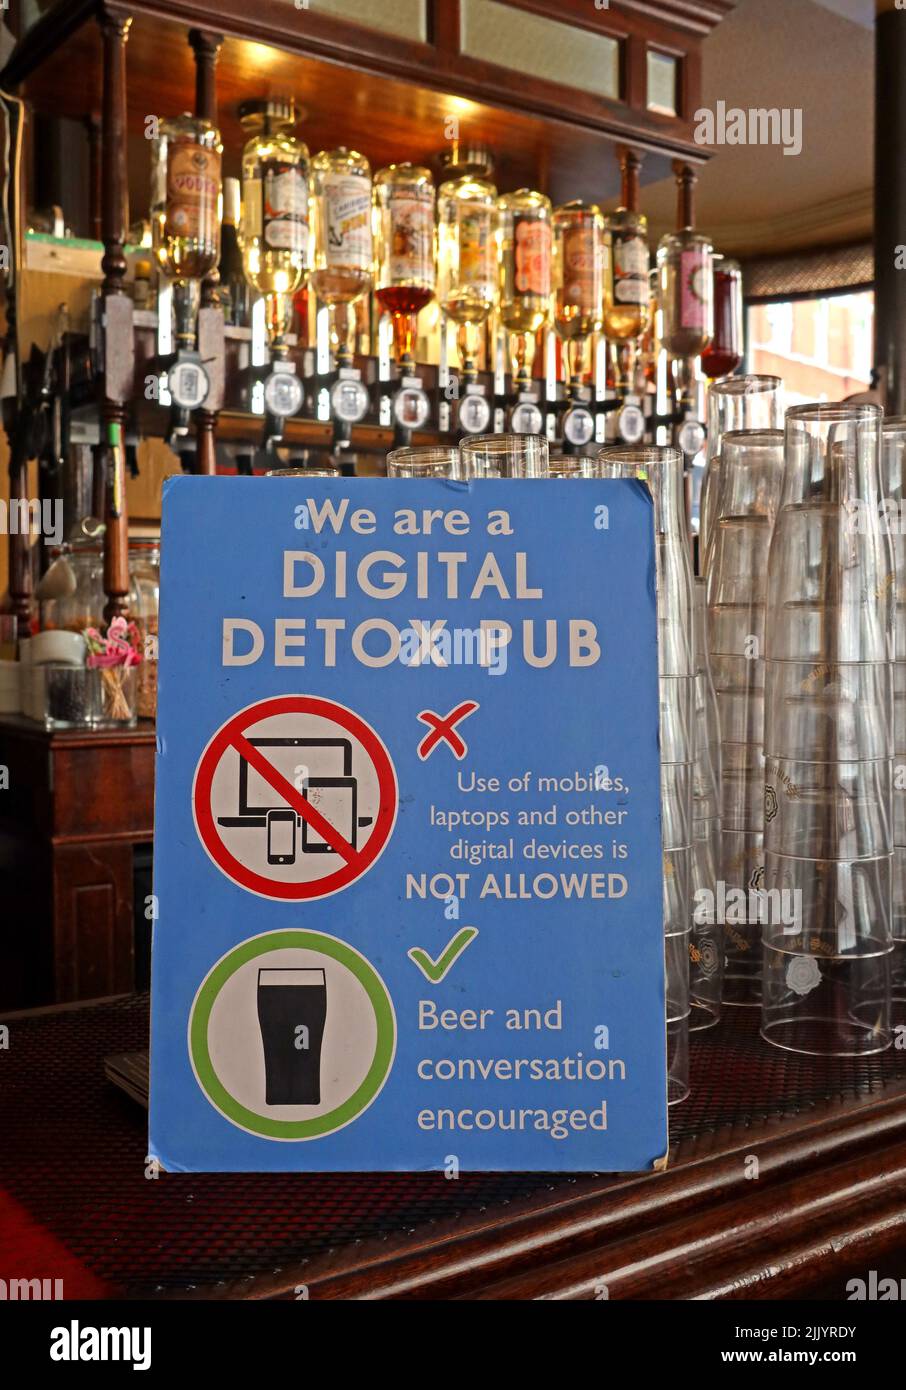 We are a digital detox pub, Digital detox at the White Horse Soho, 45 Rupert St, SOHO, London, England, UK, W1D 7PG Stock Photo